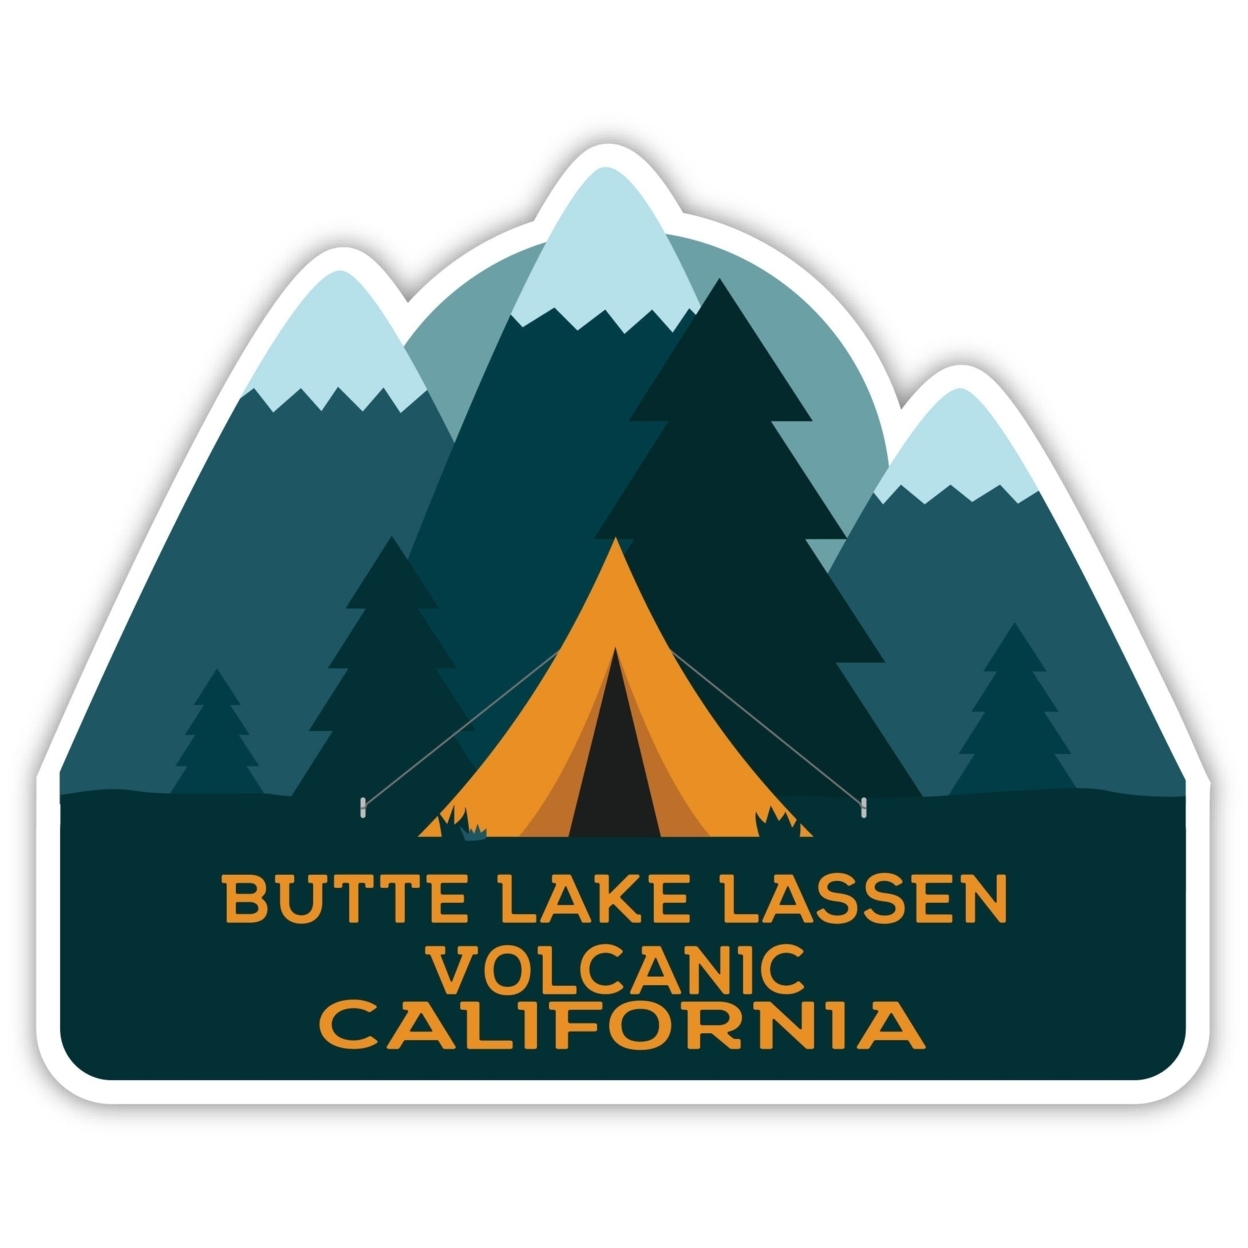 Butte Lake Lassen Volcanic California Souvenir Decorative Stickers (Choose Theme And Size) - 4-Pack, 4-Inch, Tent